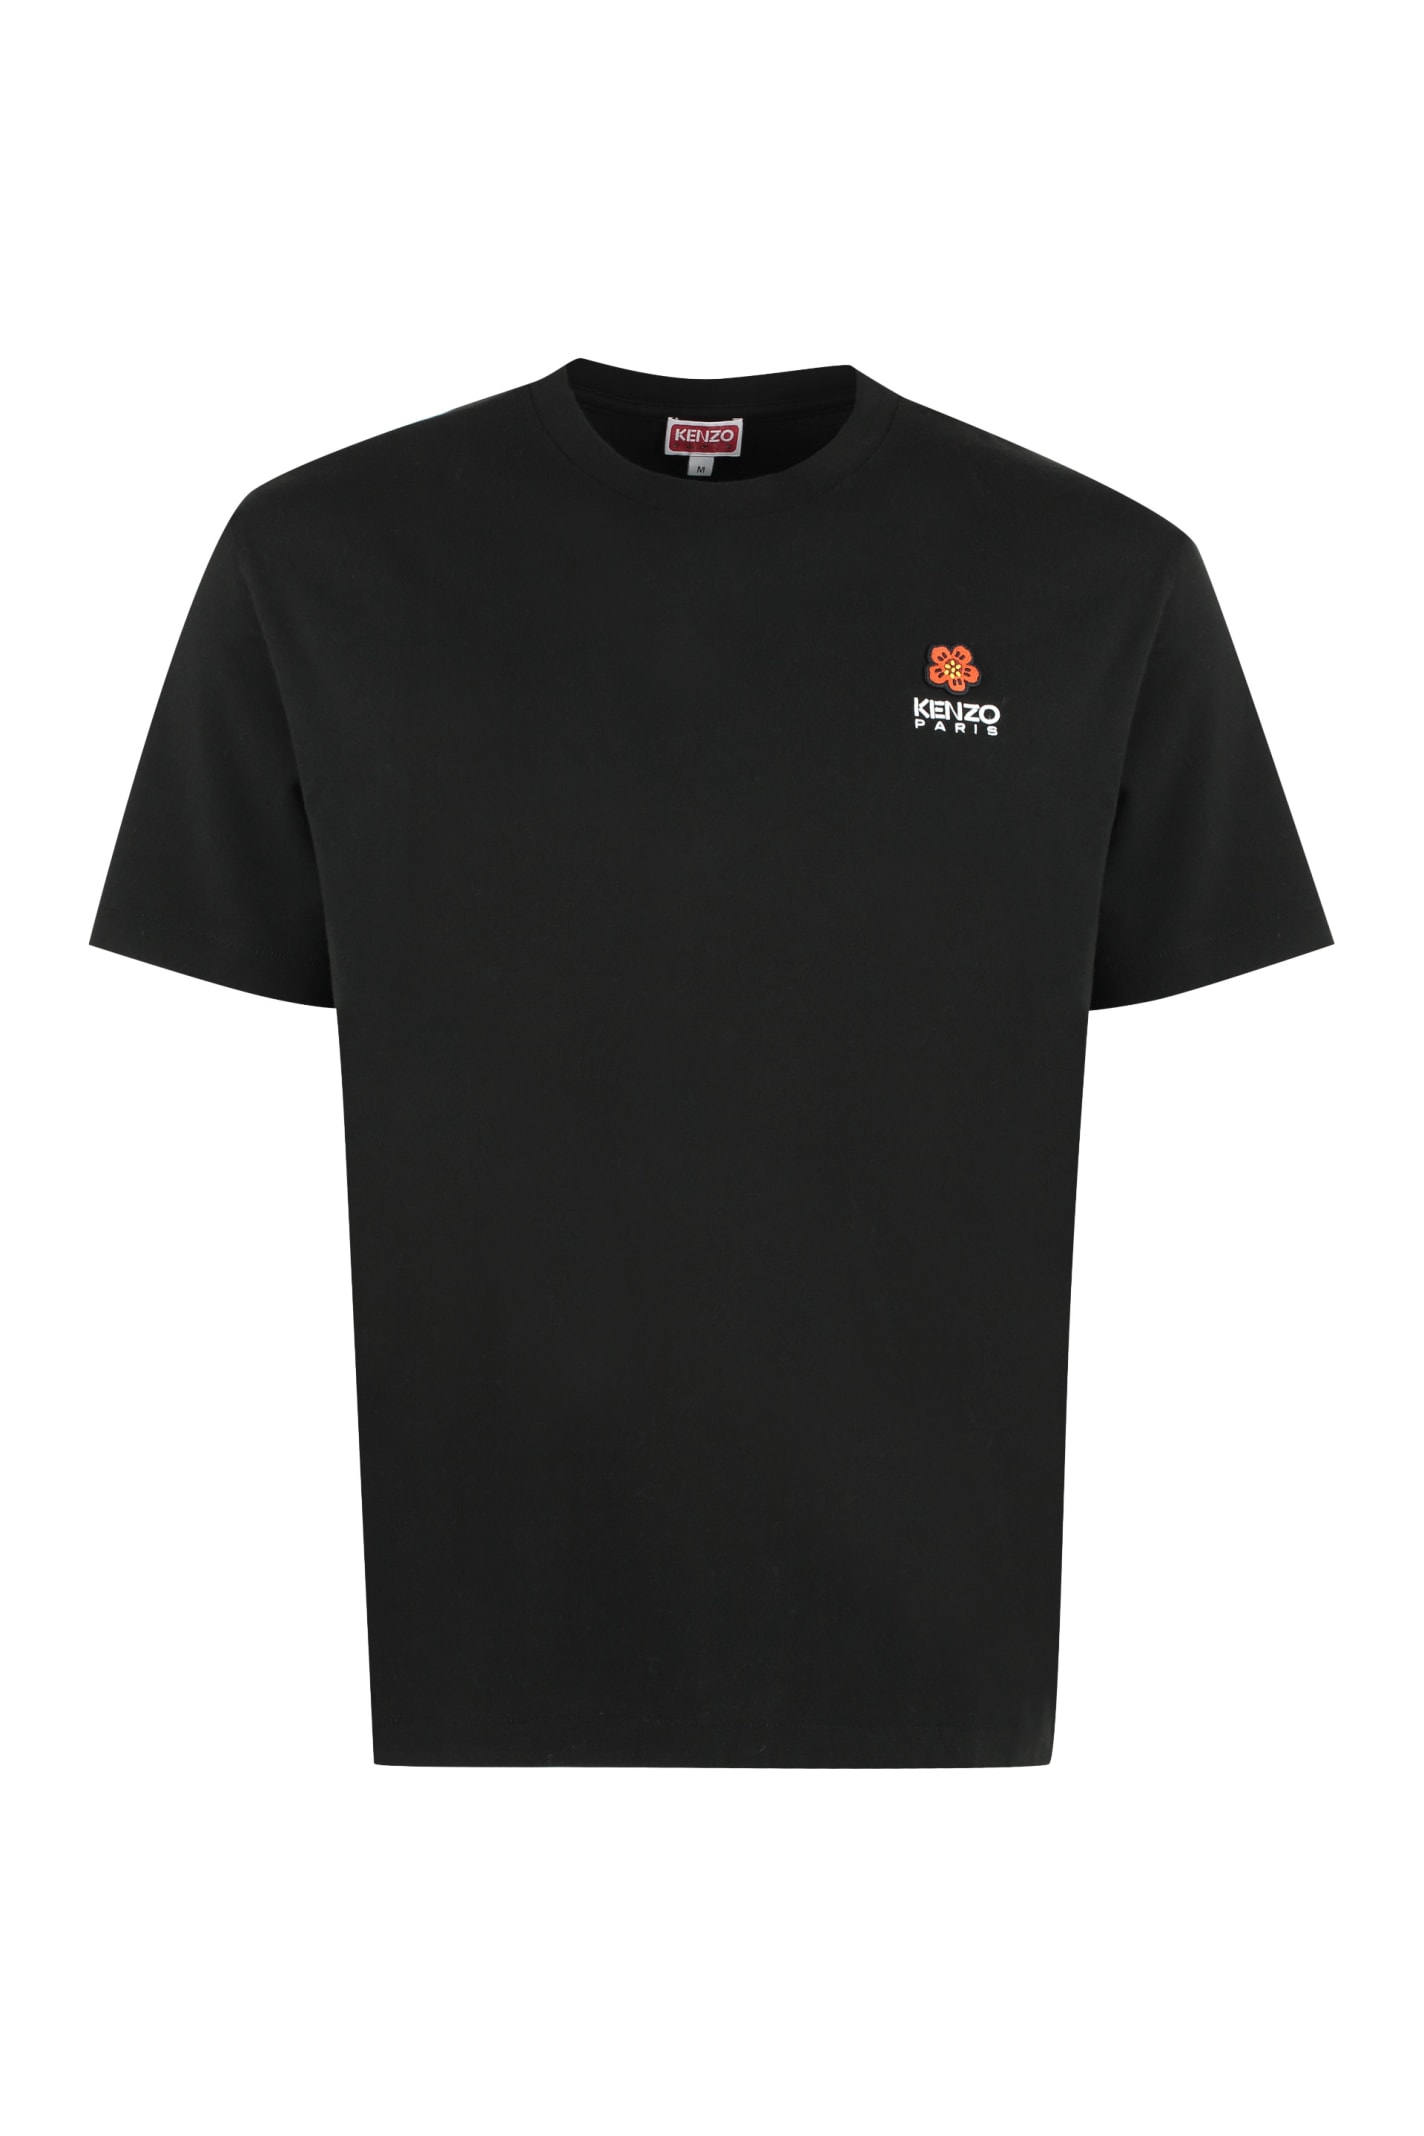 Kenzo Logo Cotton T-shirt In Black